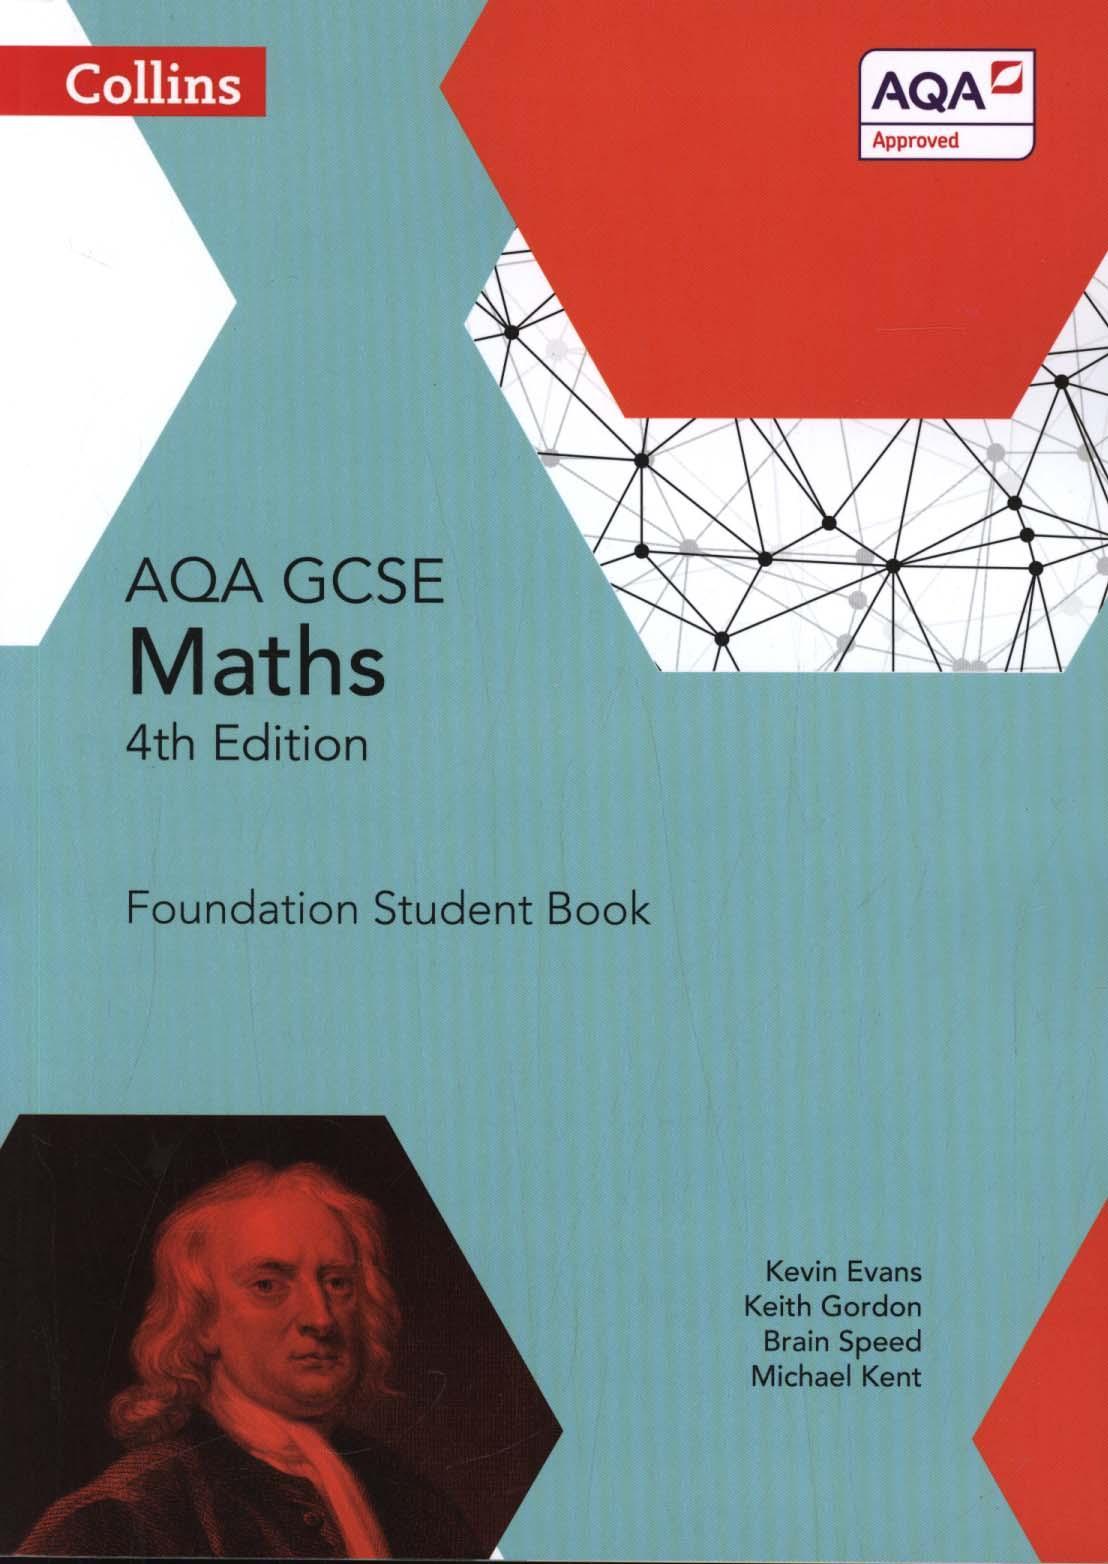 AQA GCSE Maths Foundation Student Book